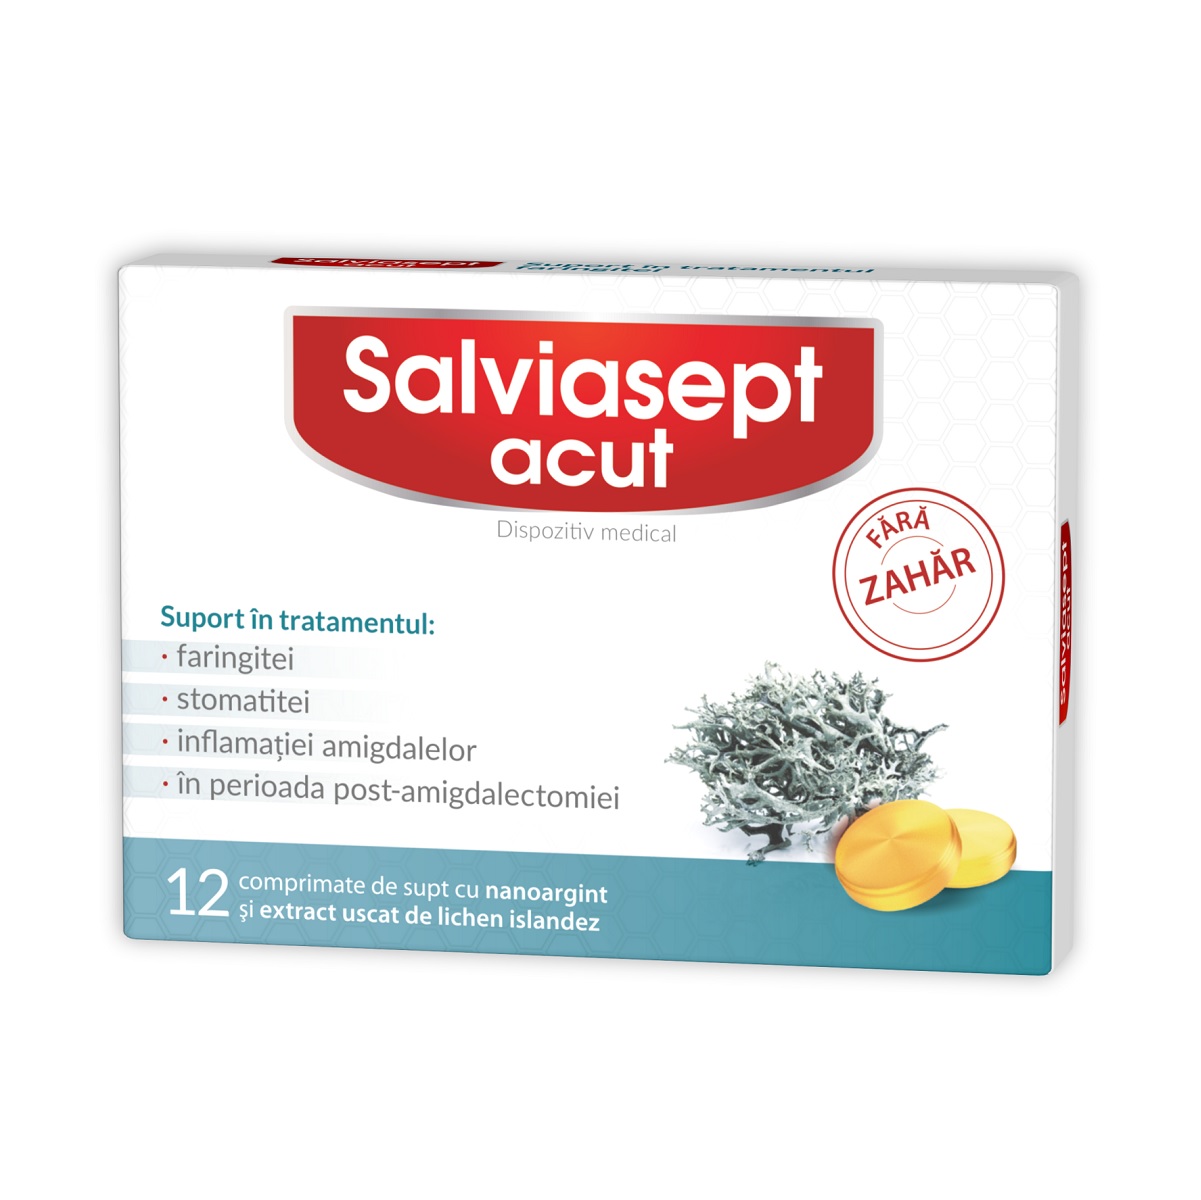 Dureri de gat - Zdrovit Salviasept acut fara zahar x 24 comprimate + 20% cadou, medik-on.ro